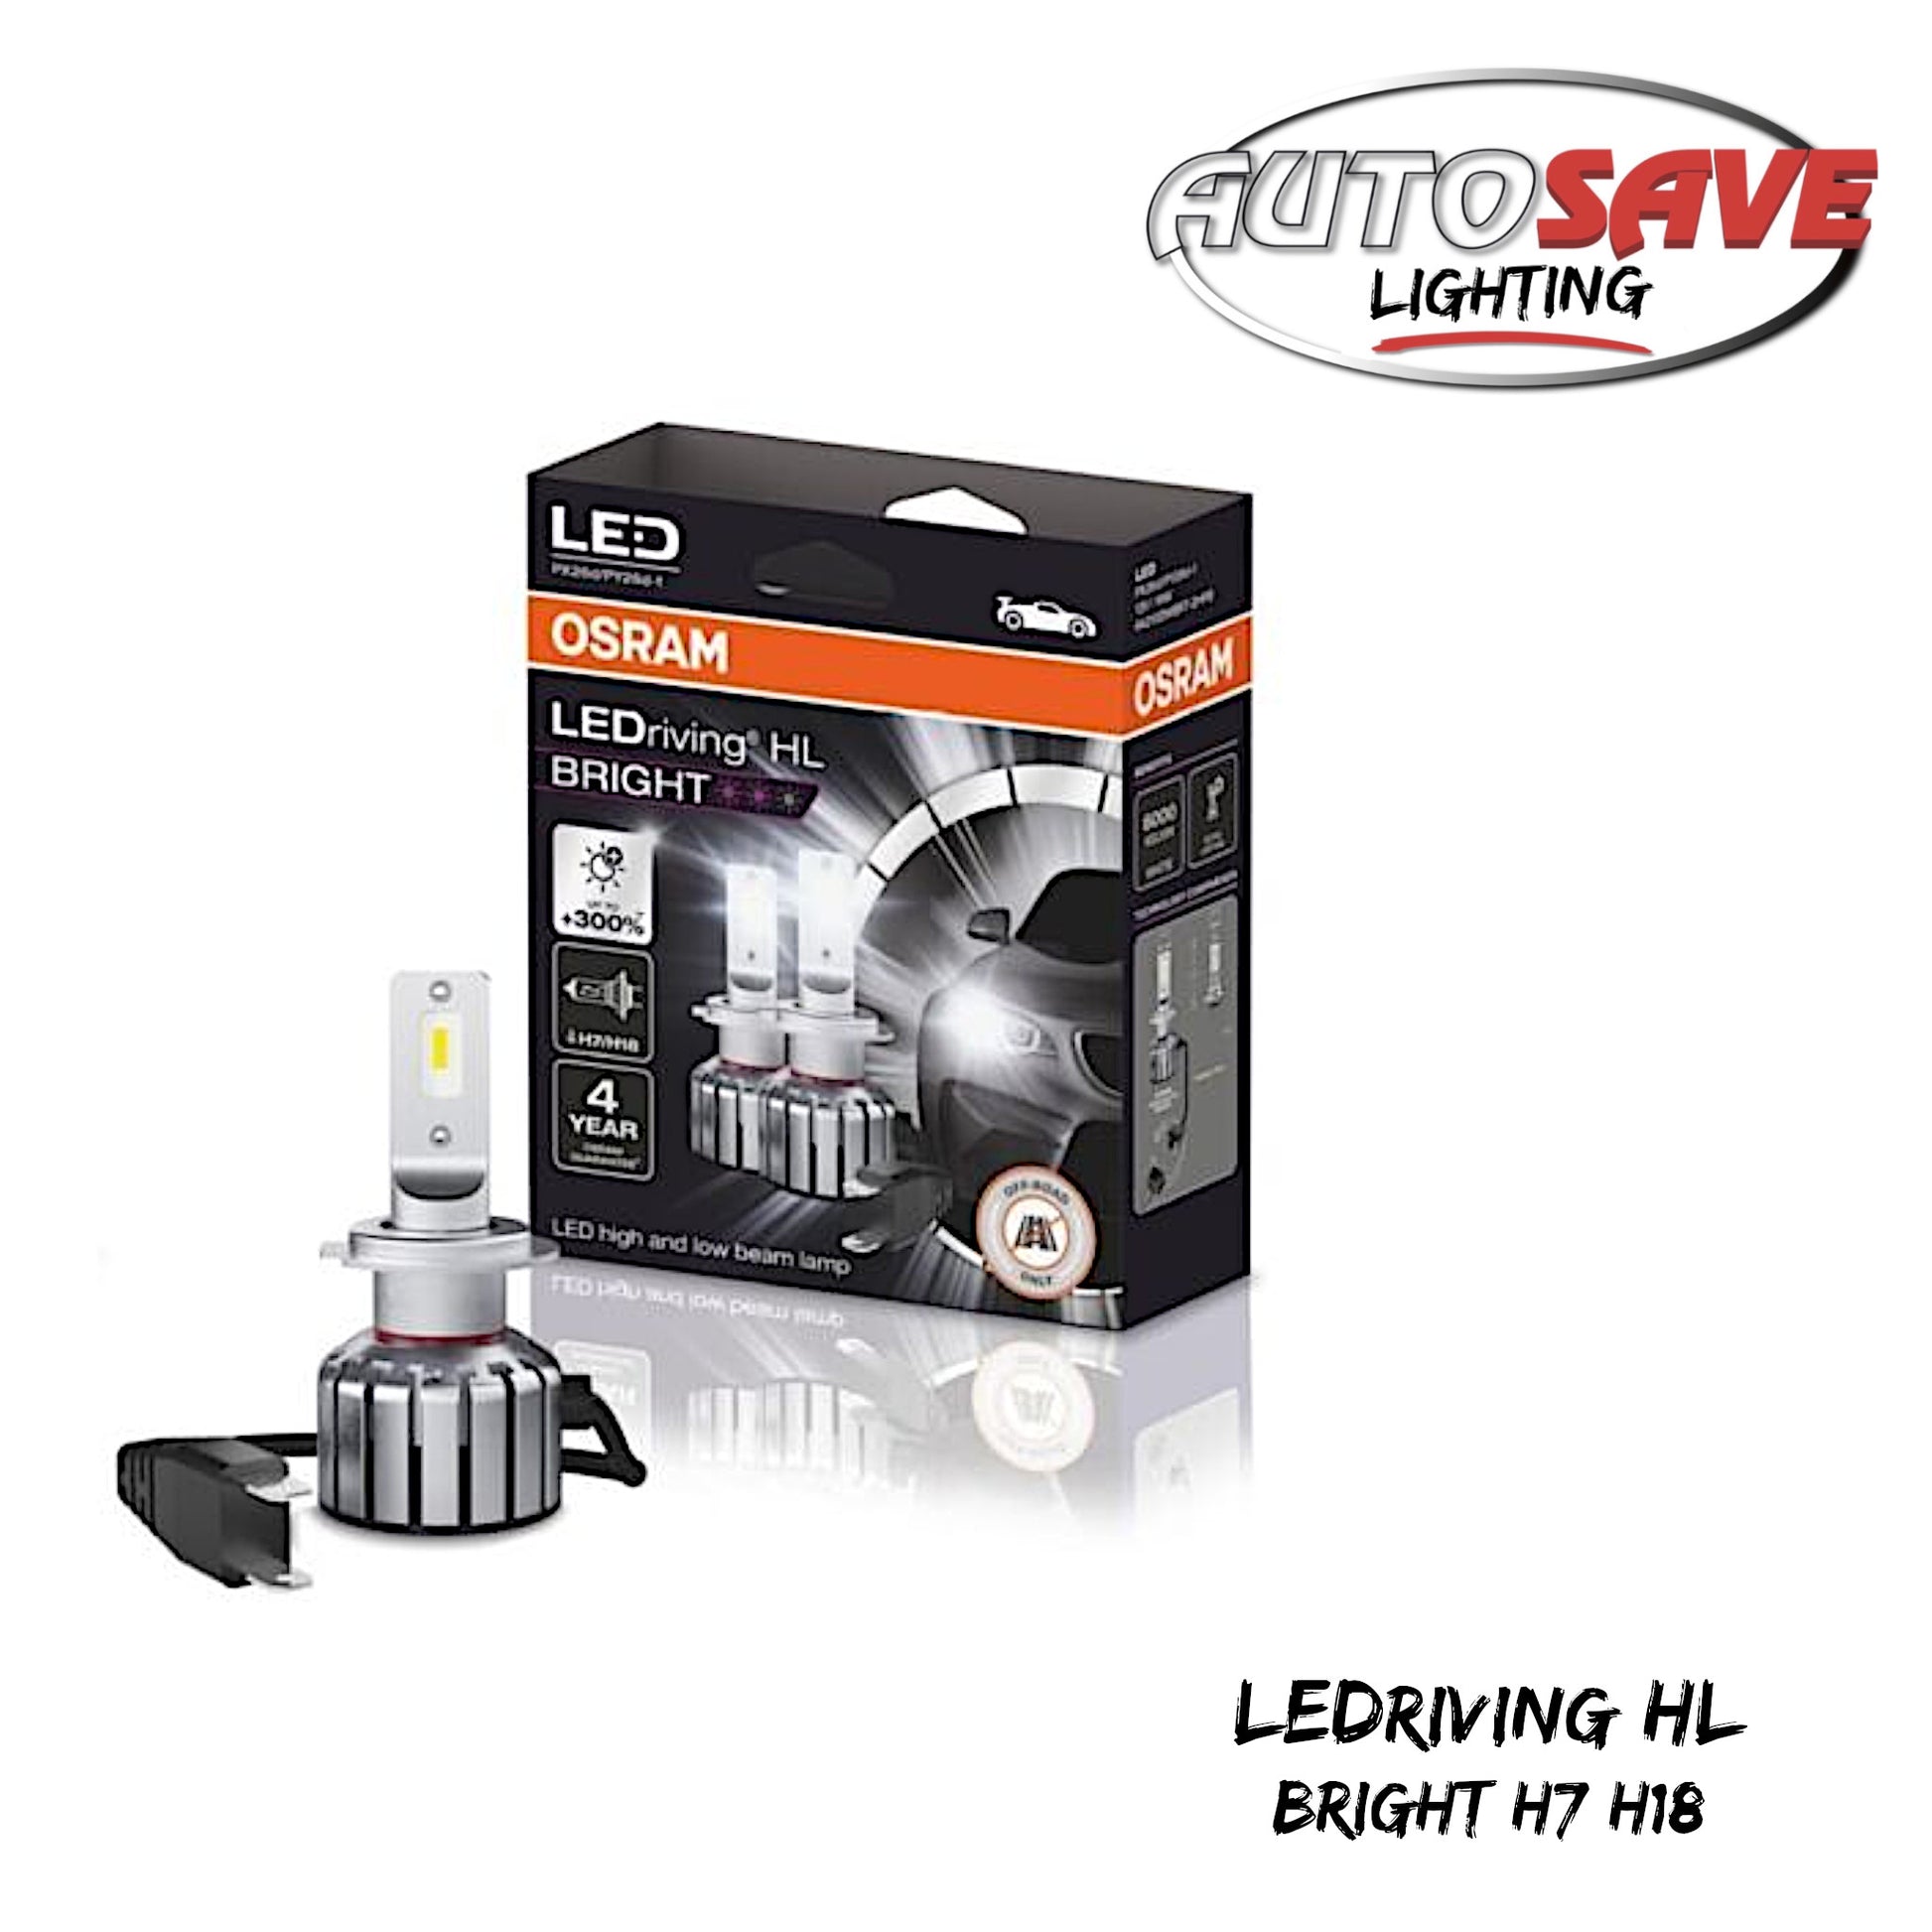 LEDriving HL INTENSE H7/H18